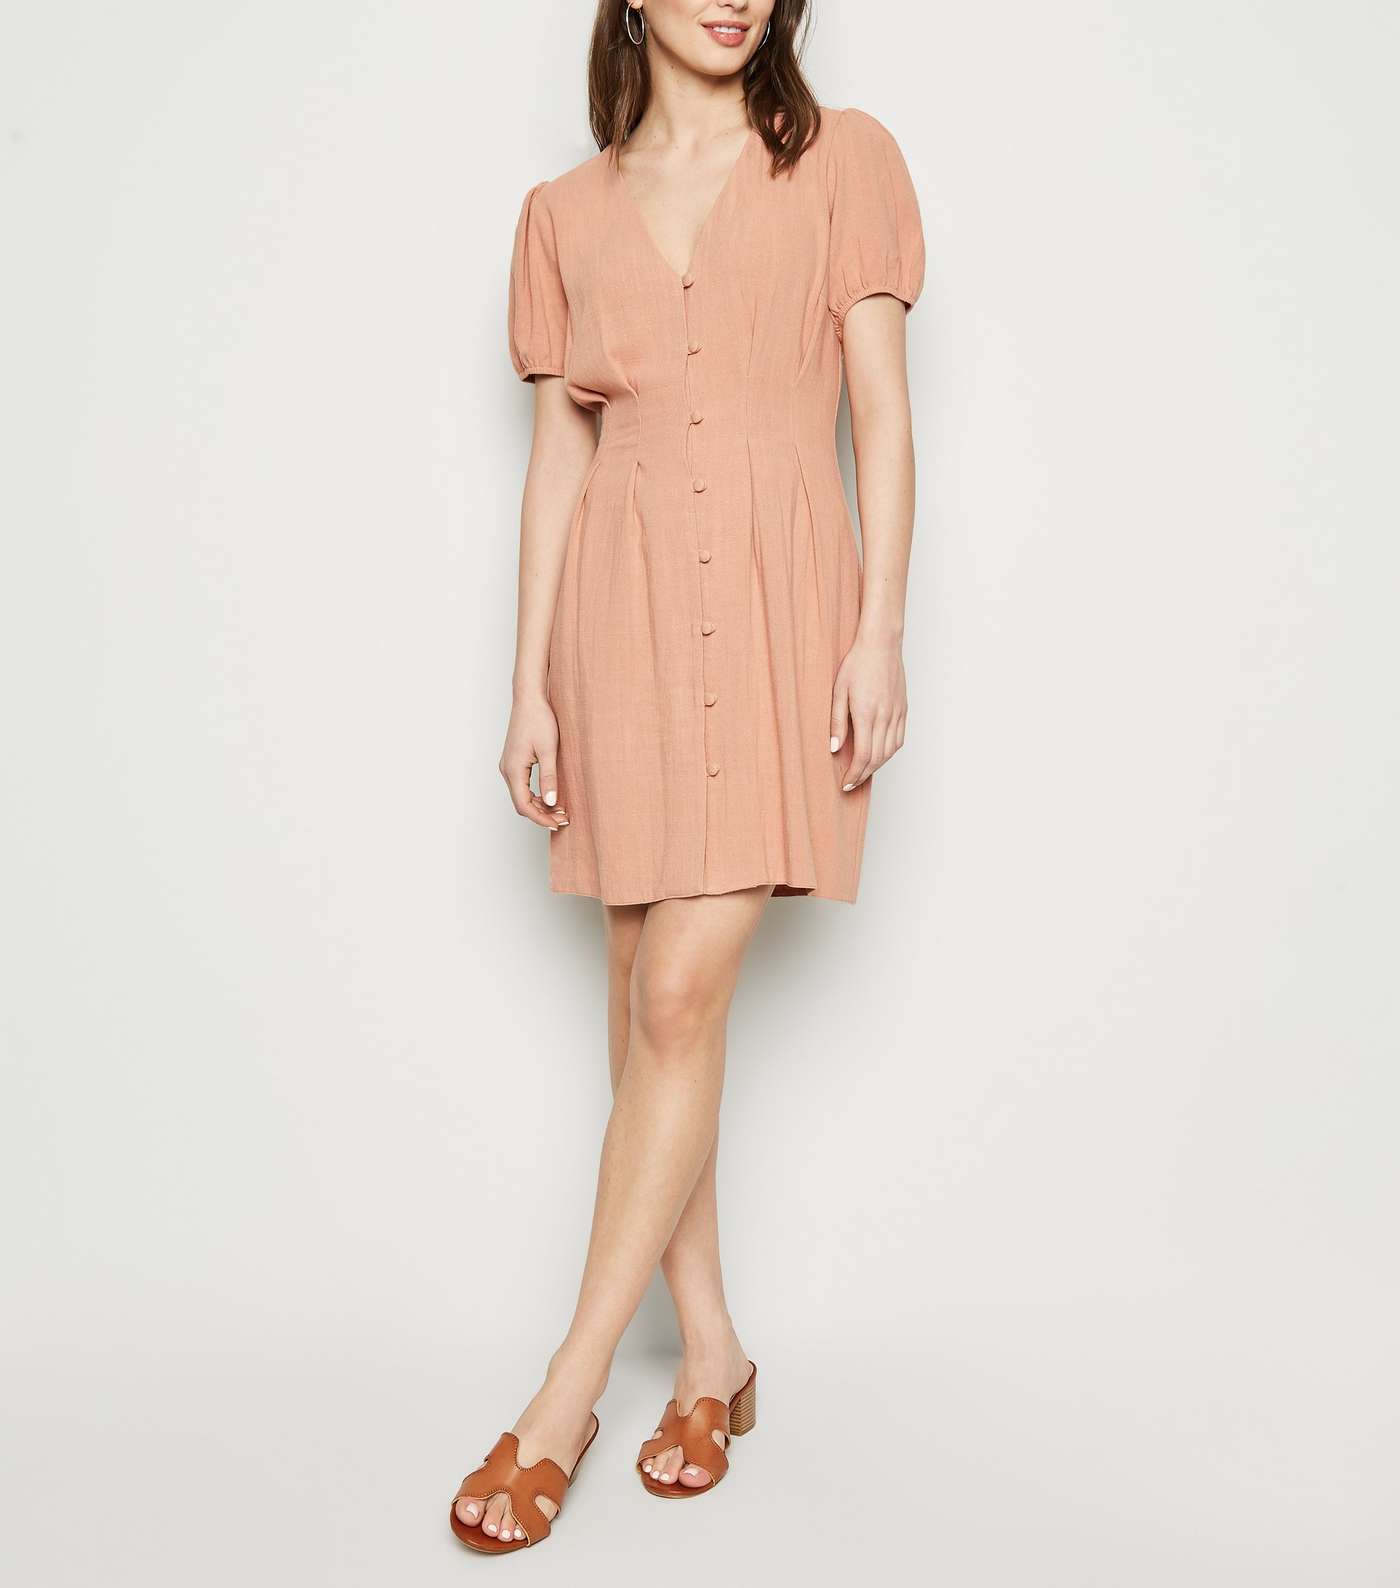 Mid Pink Linen-Look Button Up Tea Dress Image 2